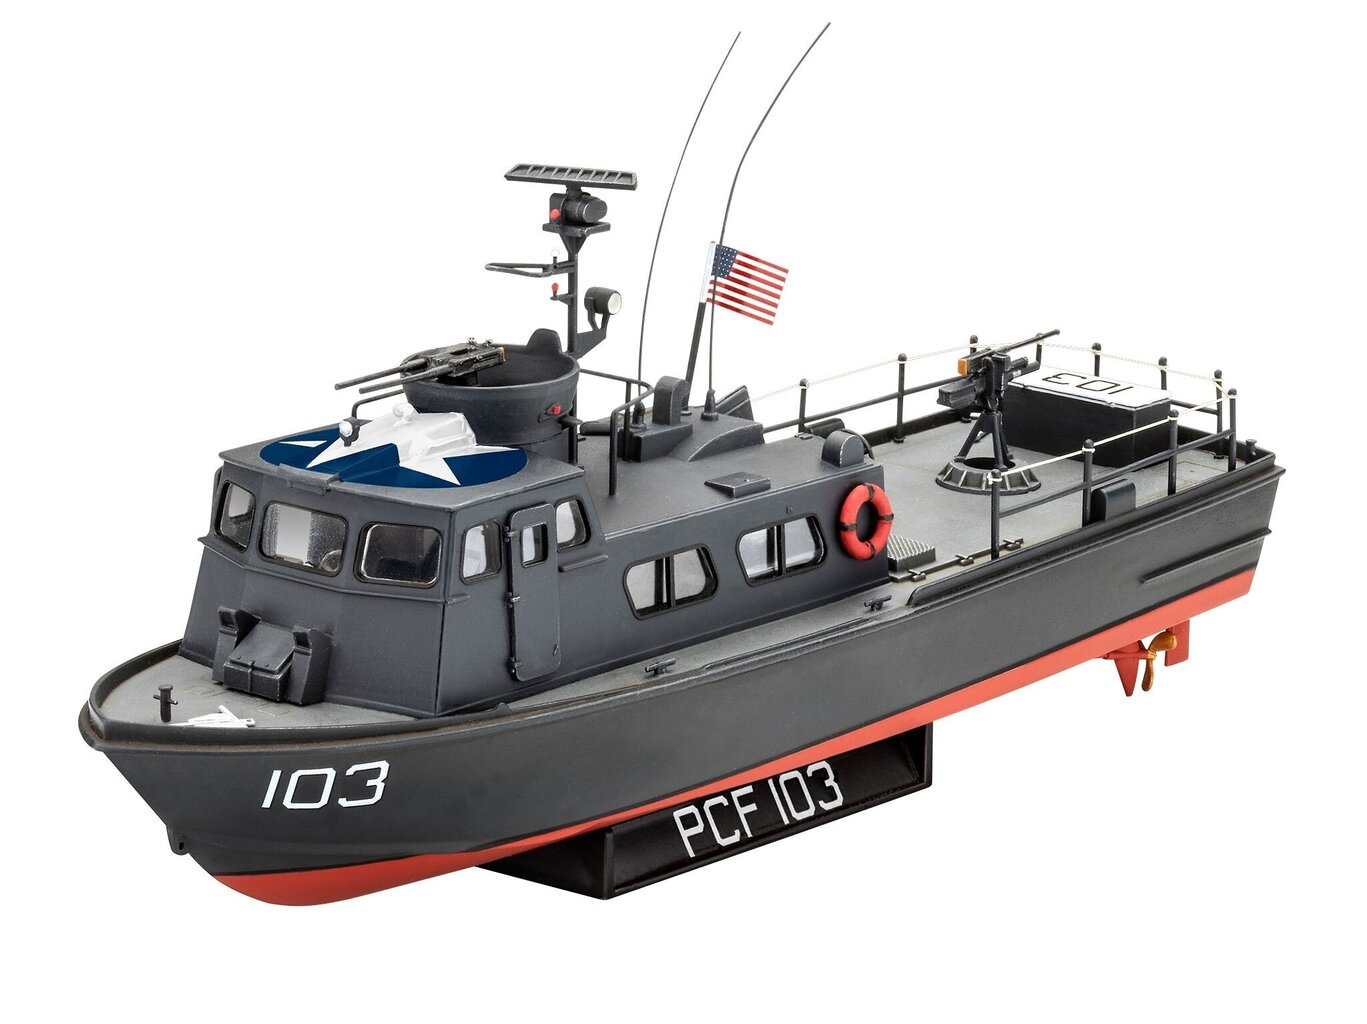 Dāvanu komplekts Revell - US Navy Swift Boat Mk.I, 1/72, 65176 cena un informācija | Konstruktori | 220.lv